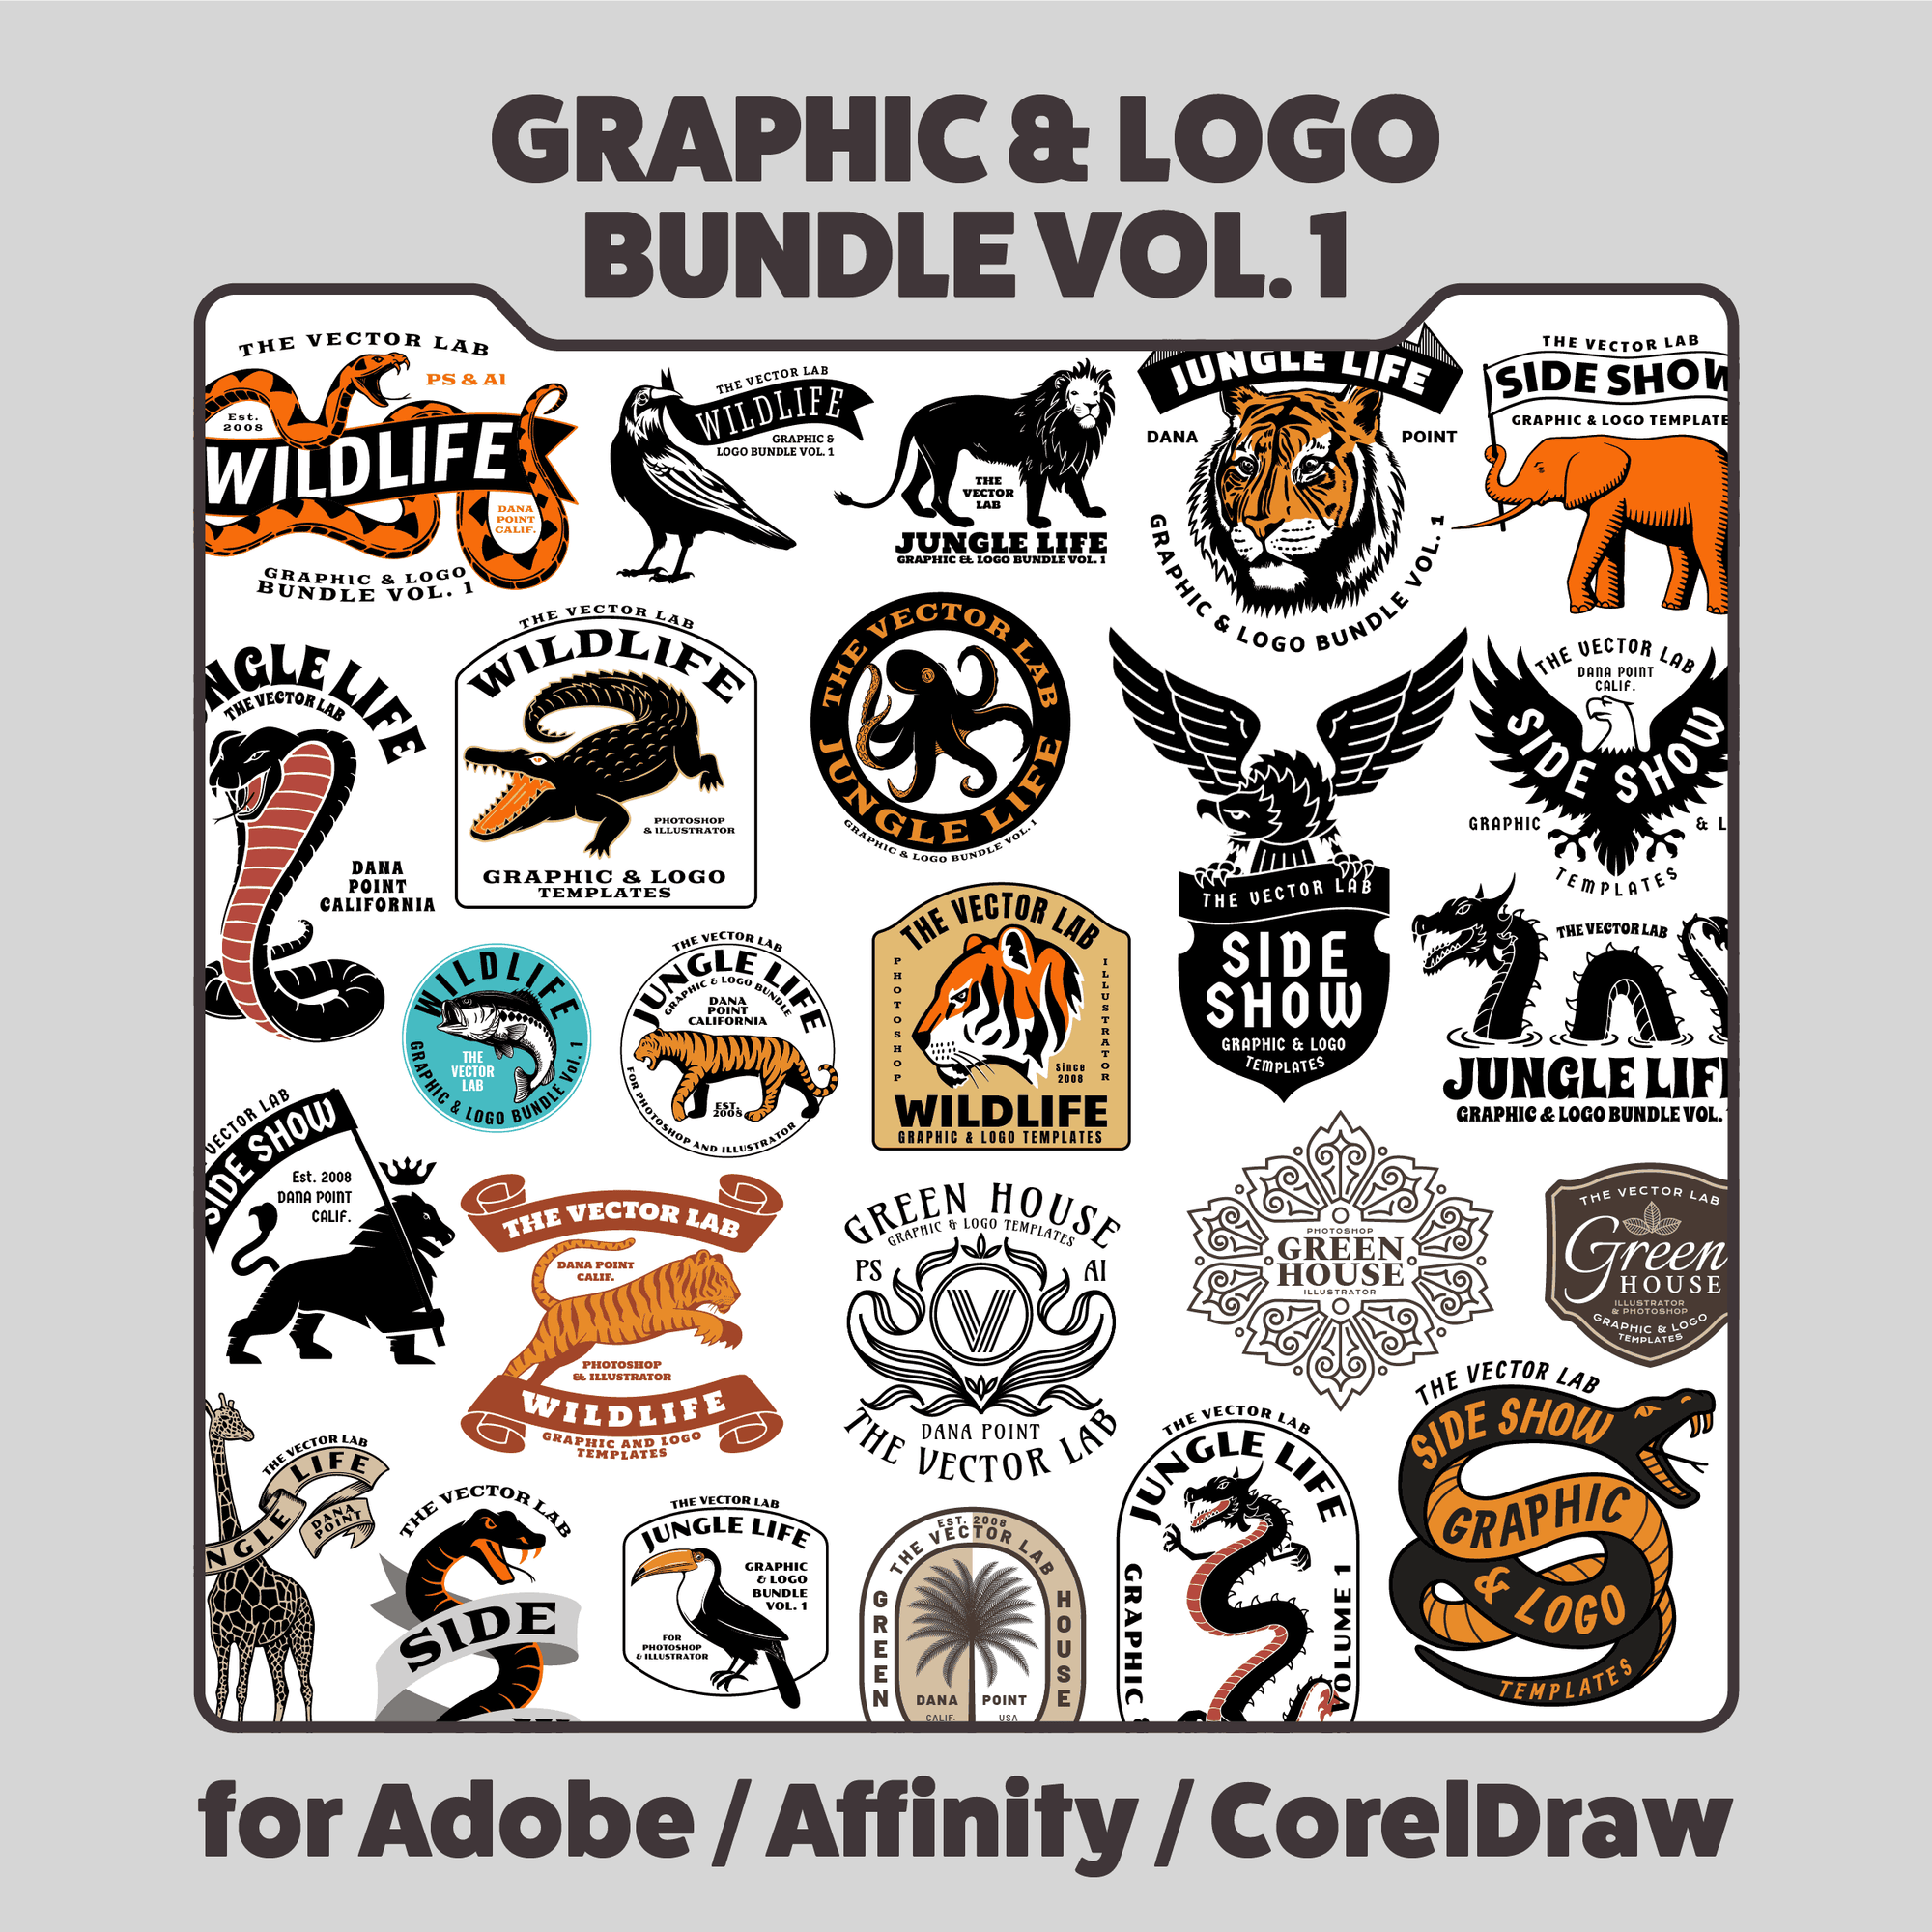 Graphic & Logo Bundle Vol 1 - For Adobe, Affinity, CorelDraw